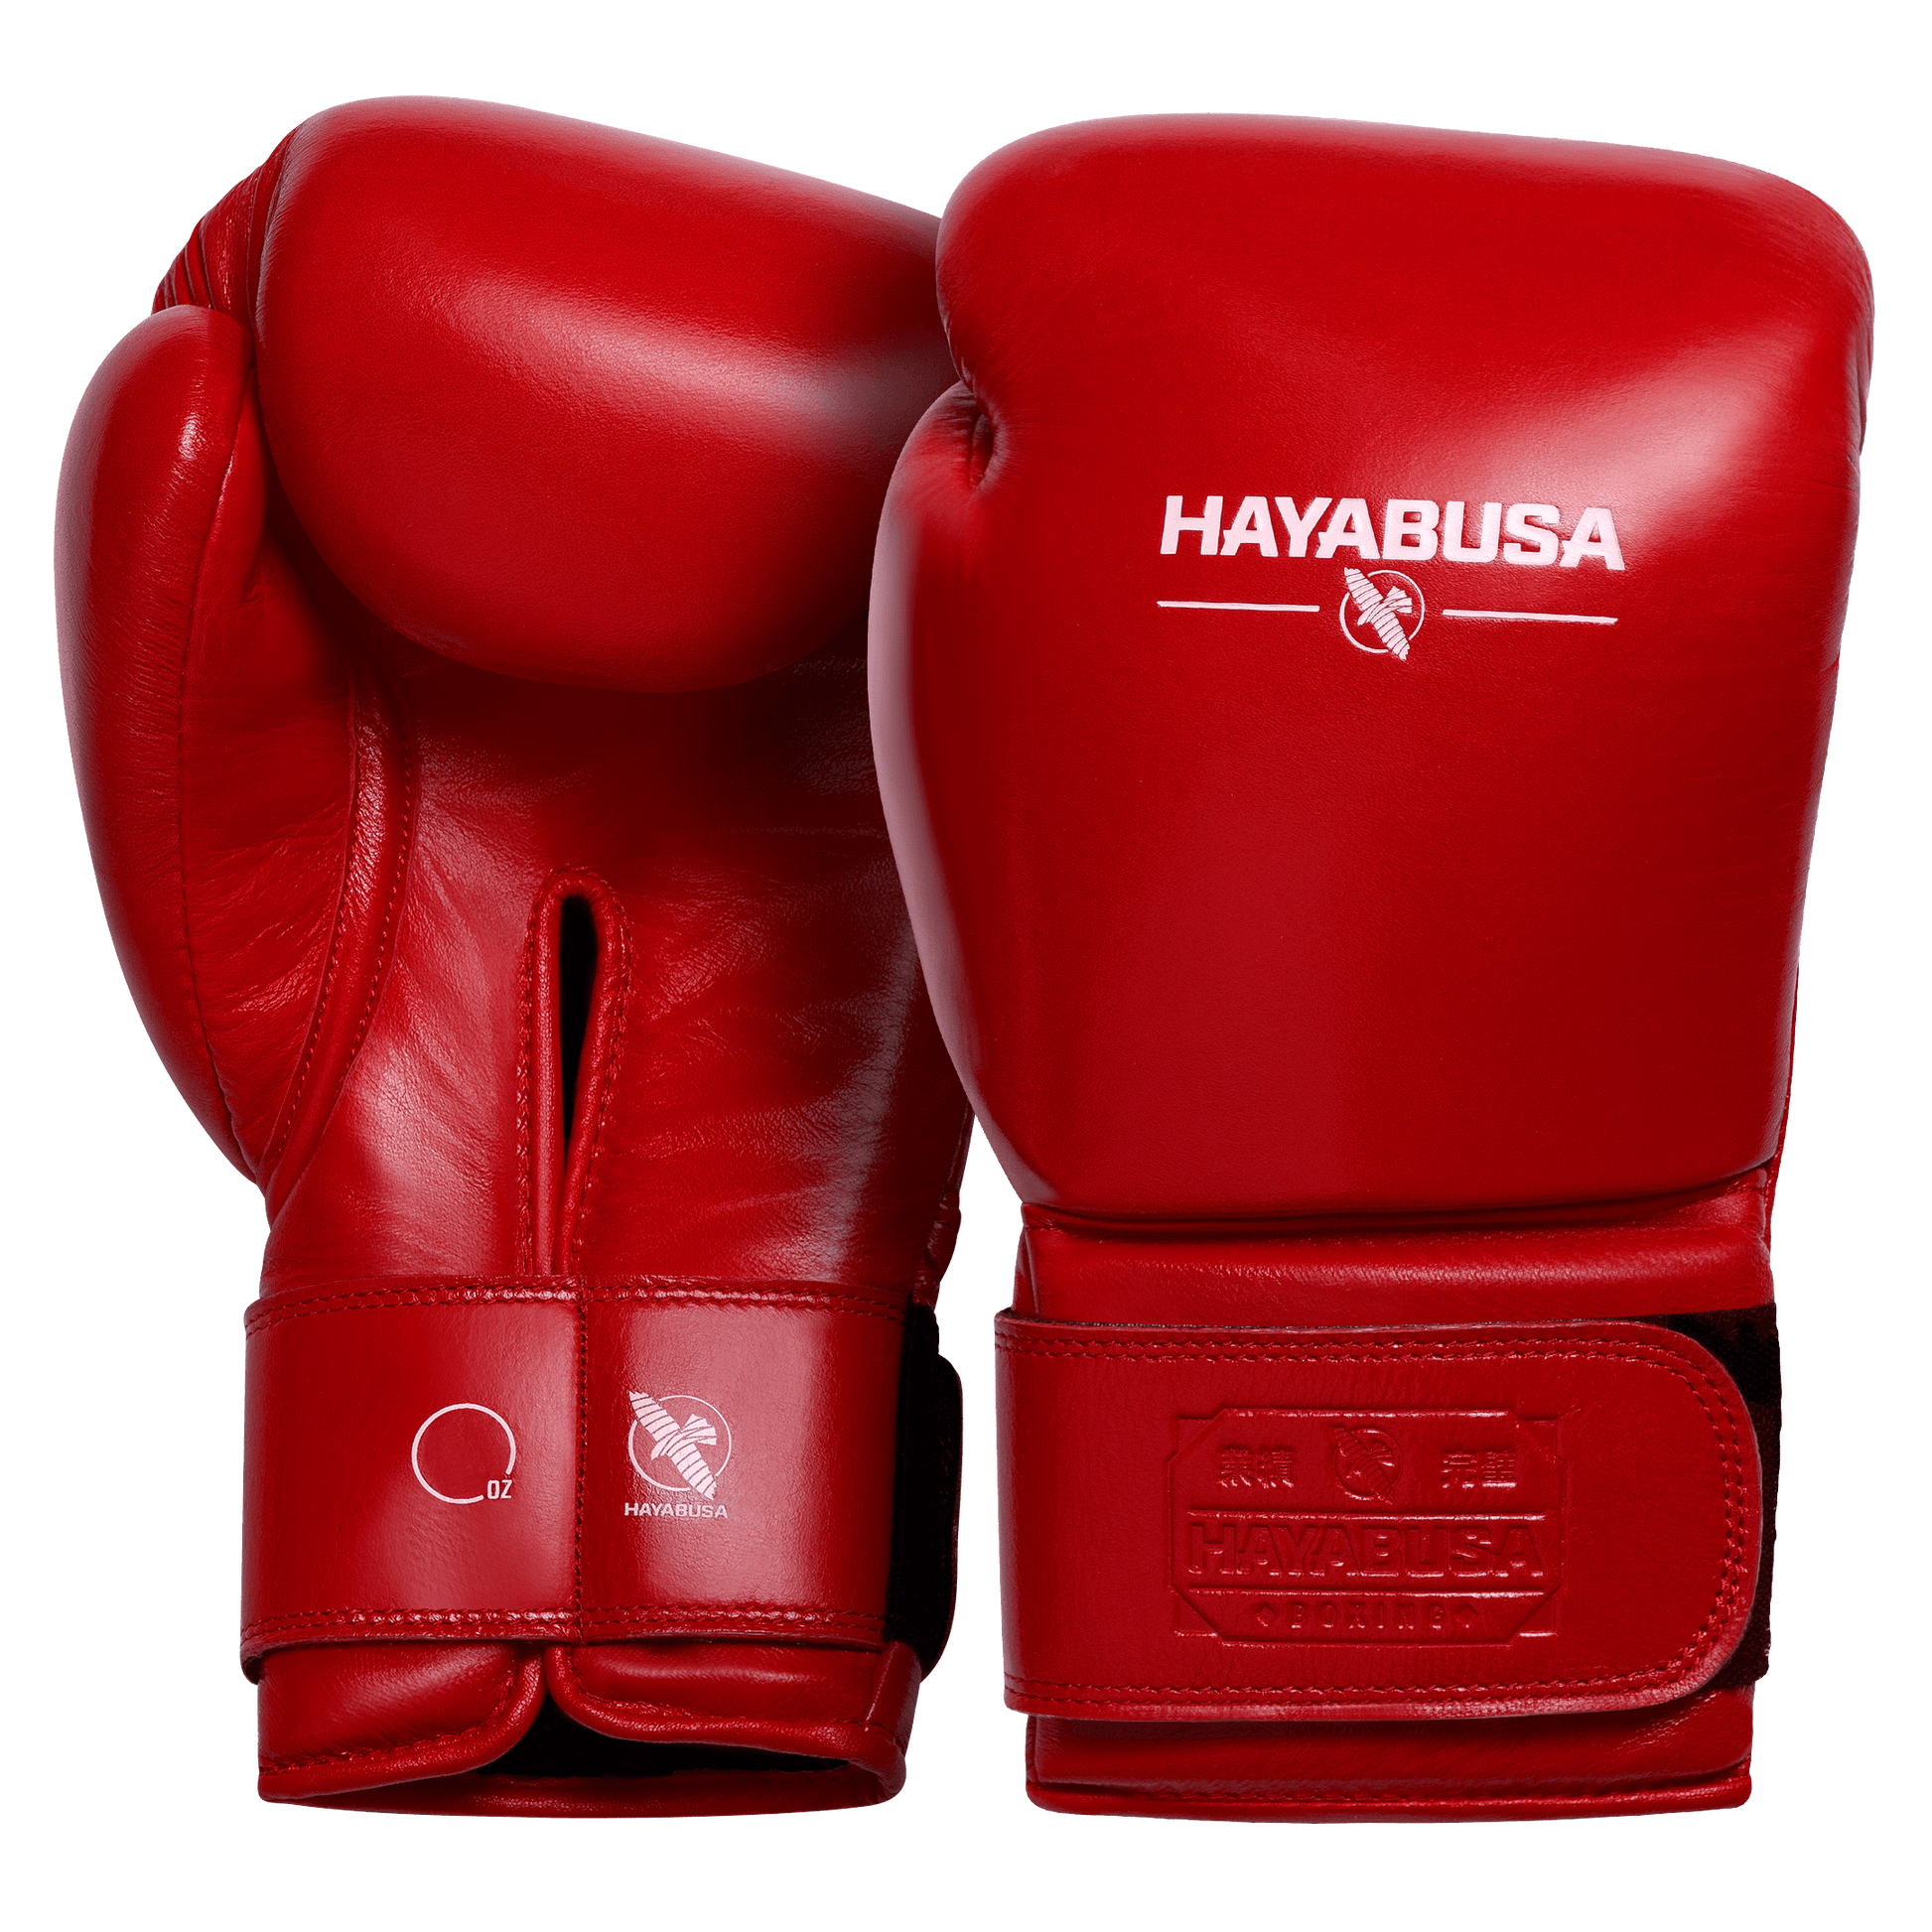 Hayabusa Pro Boxing Gloves - Violent Art Shop